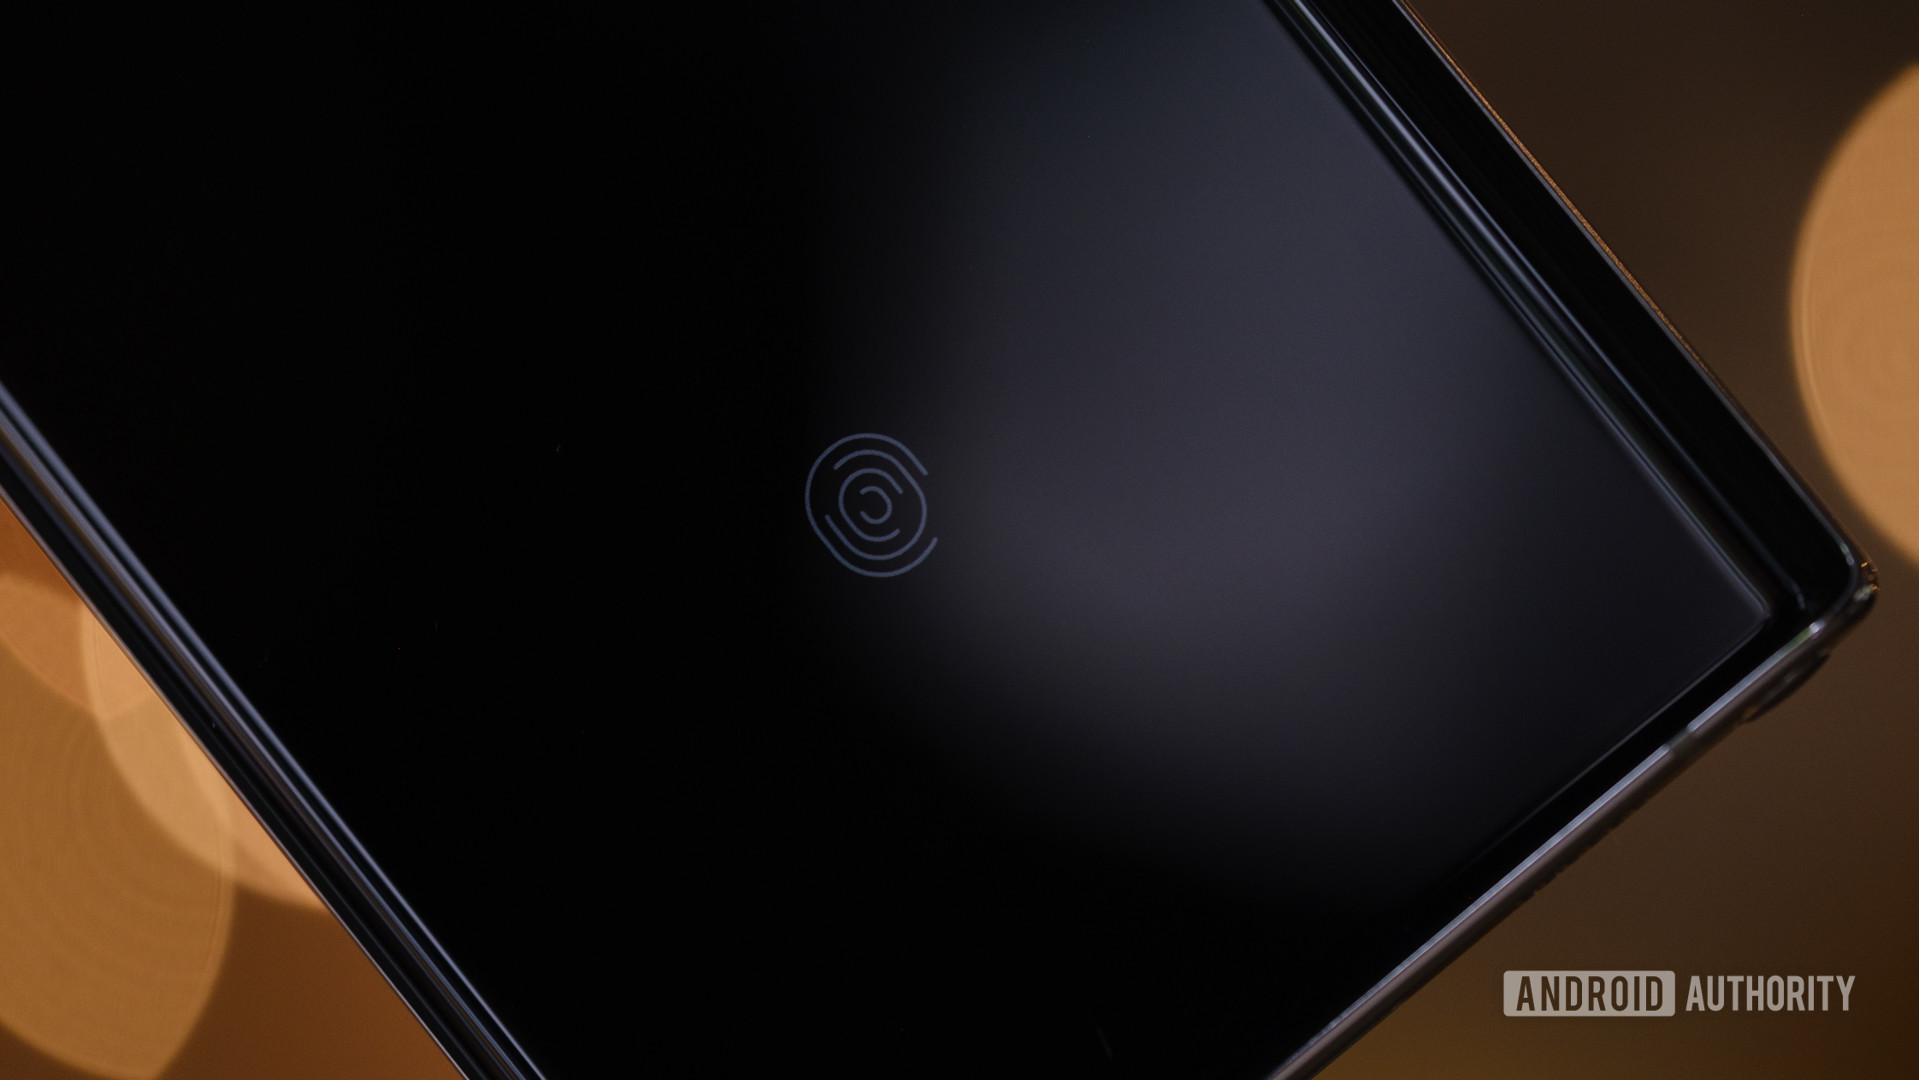 Samsung Galaxy Note 10 Plus in display fingerprint reader